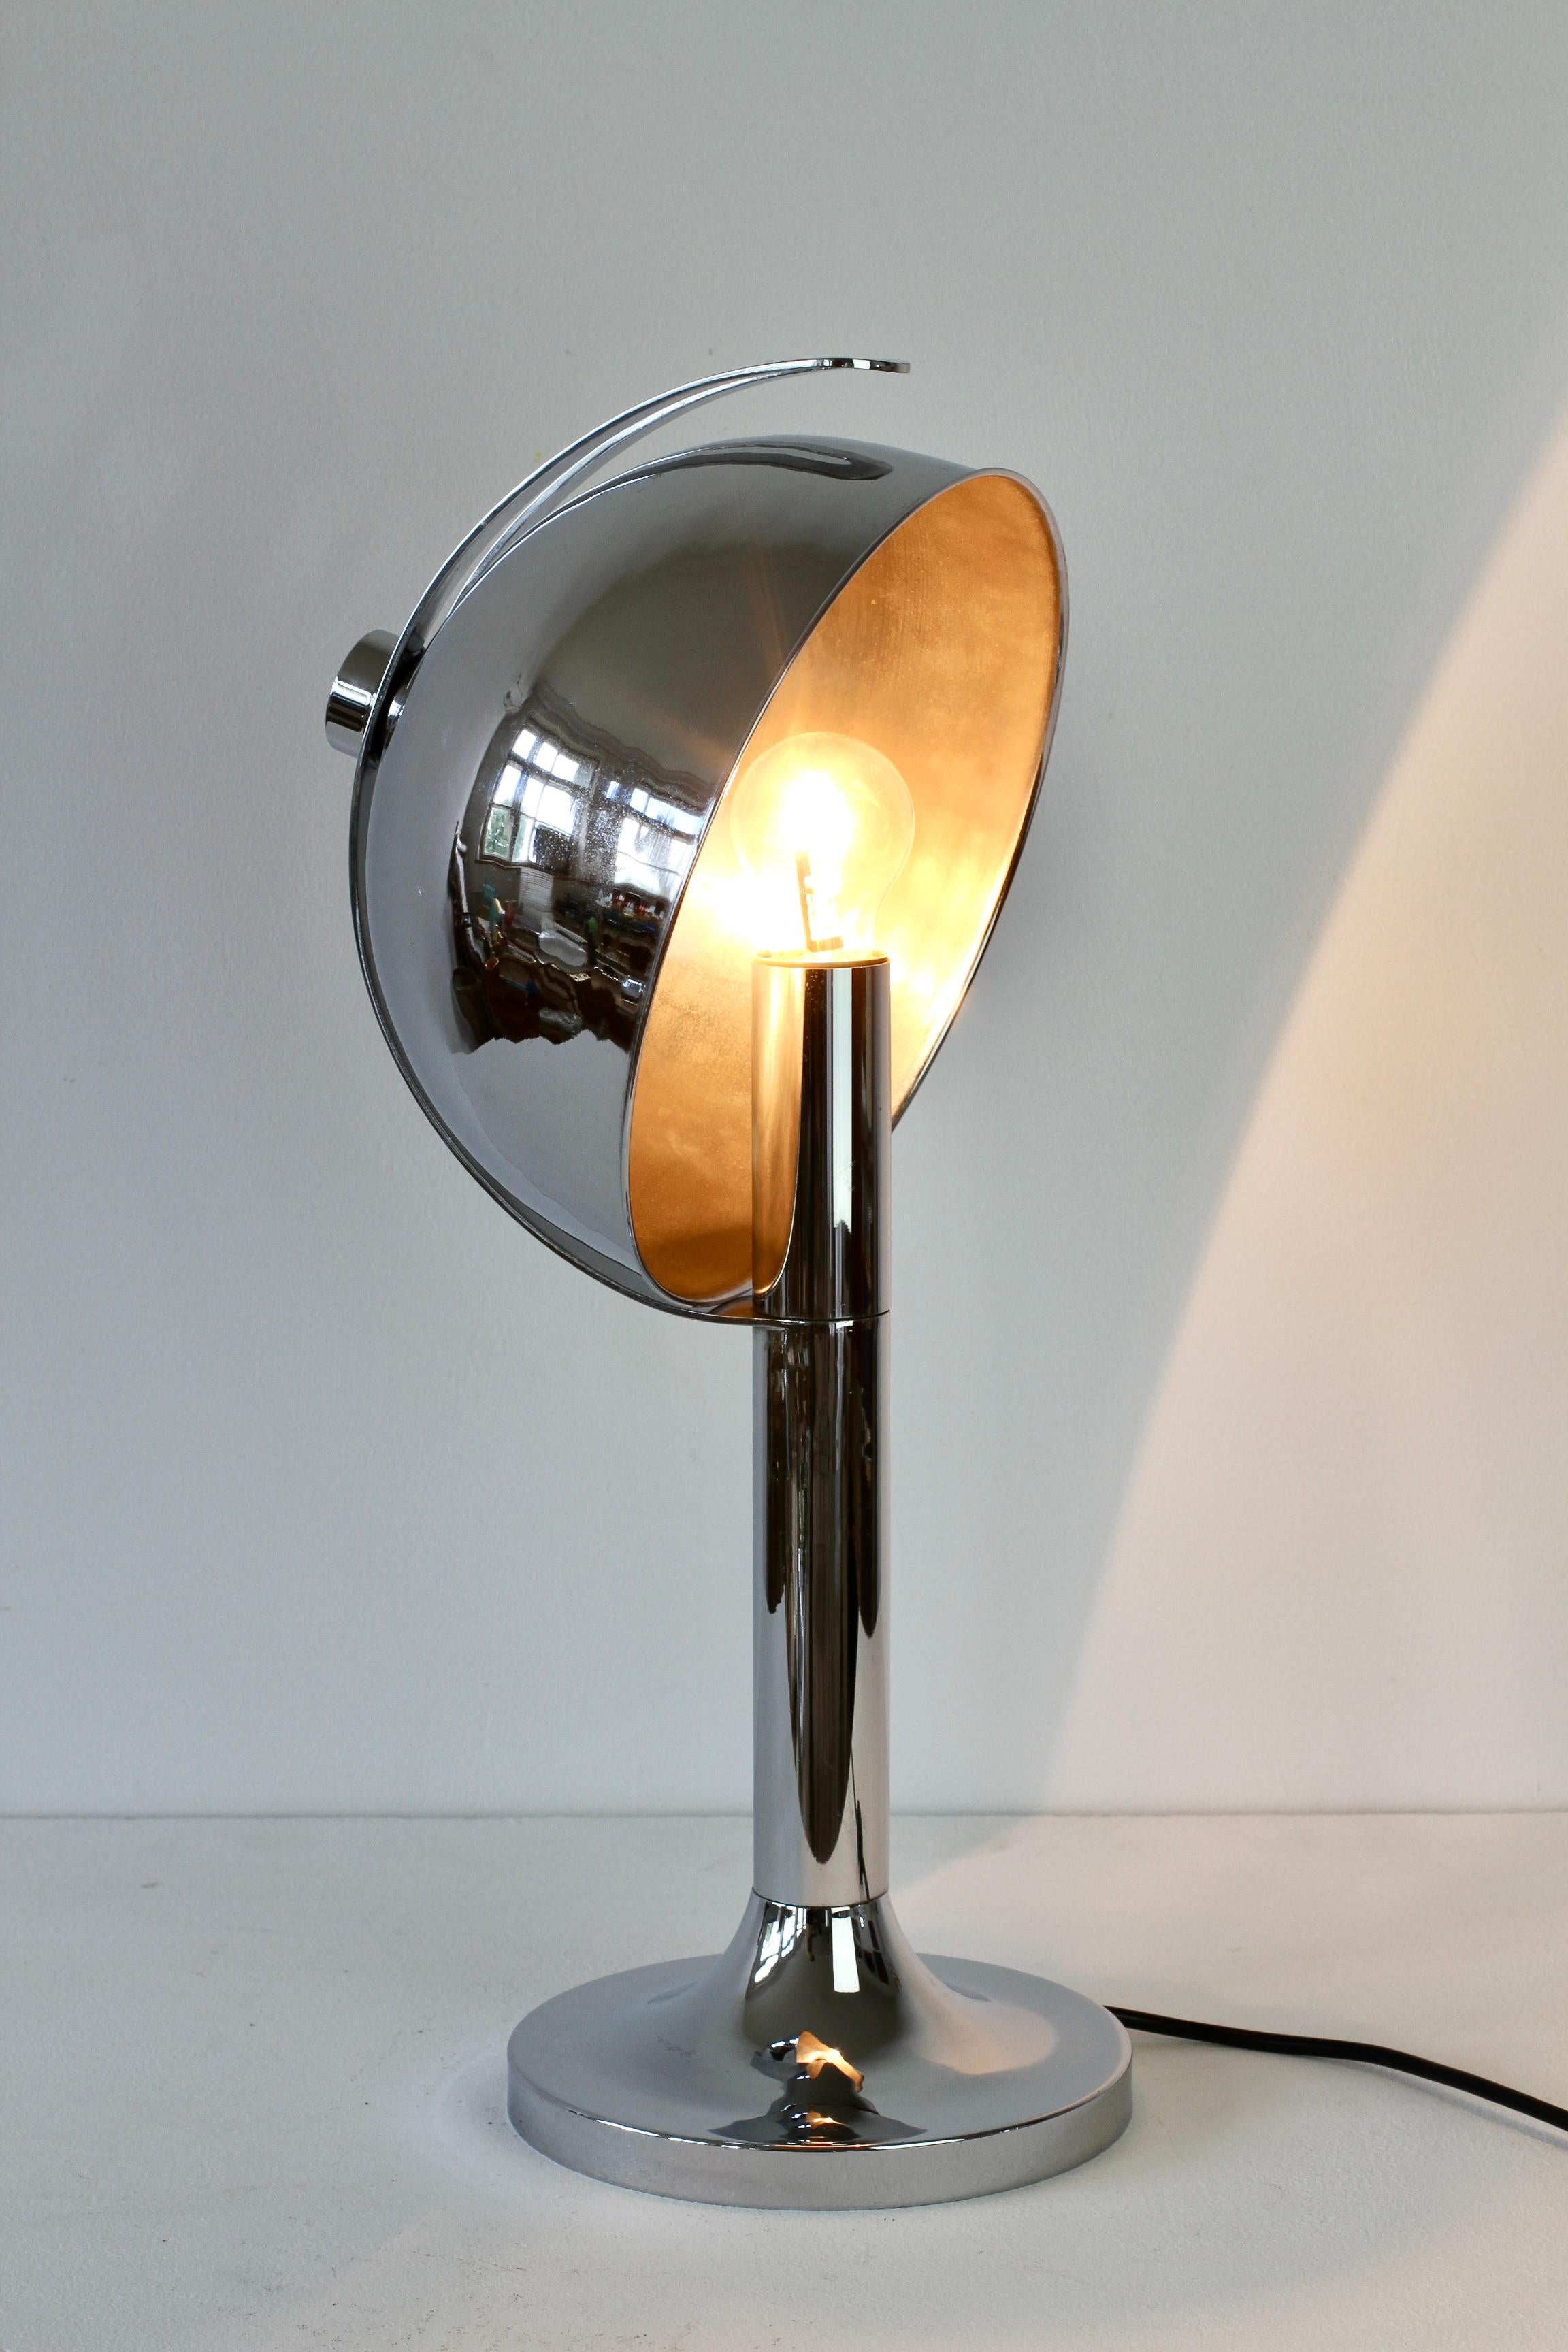 Rare Florian Schulz Mid-Century Vintage Modernist Chrome Adjustable Table Lamp For Sale 7